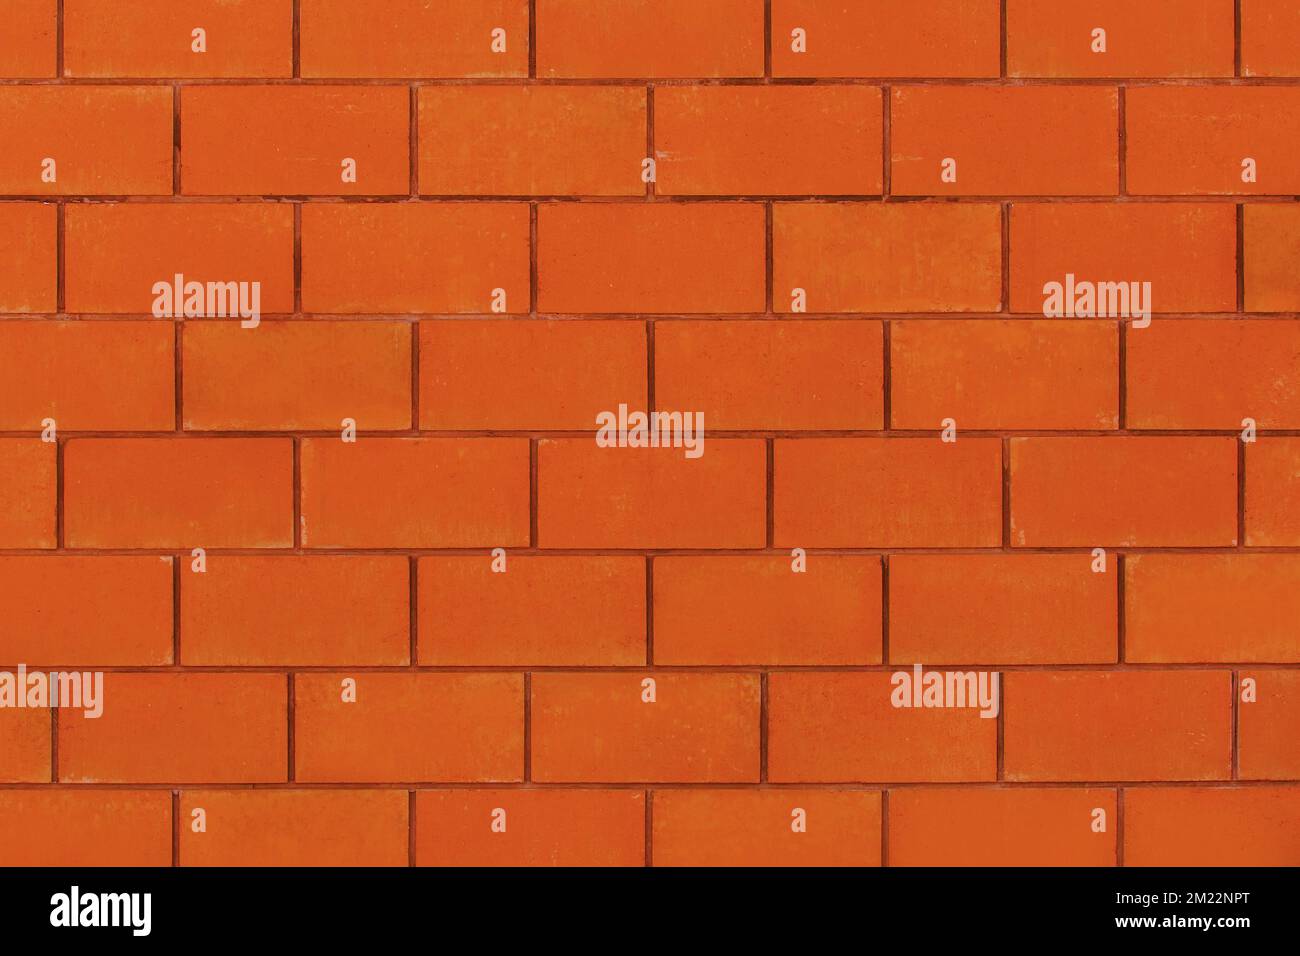 Orange-brown paint on brick blocks urban design wall texture pattern background architecture stone abstract. Stock Photo